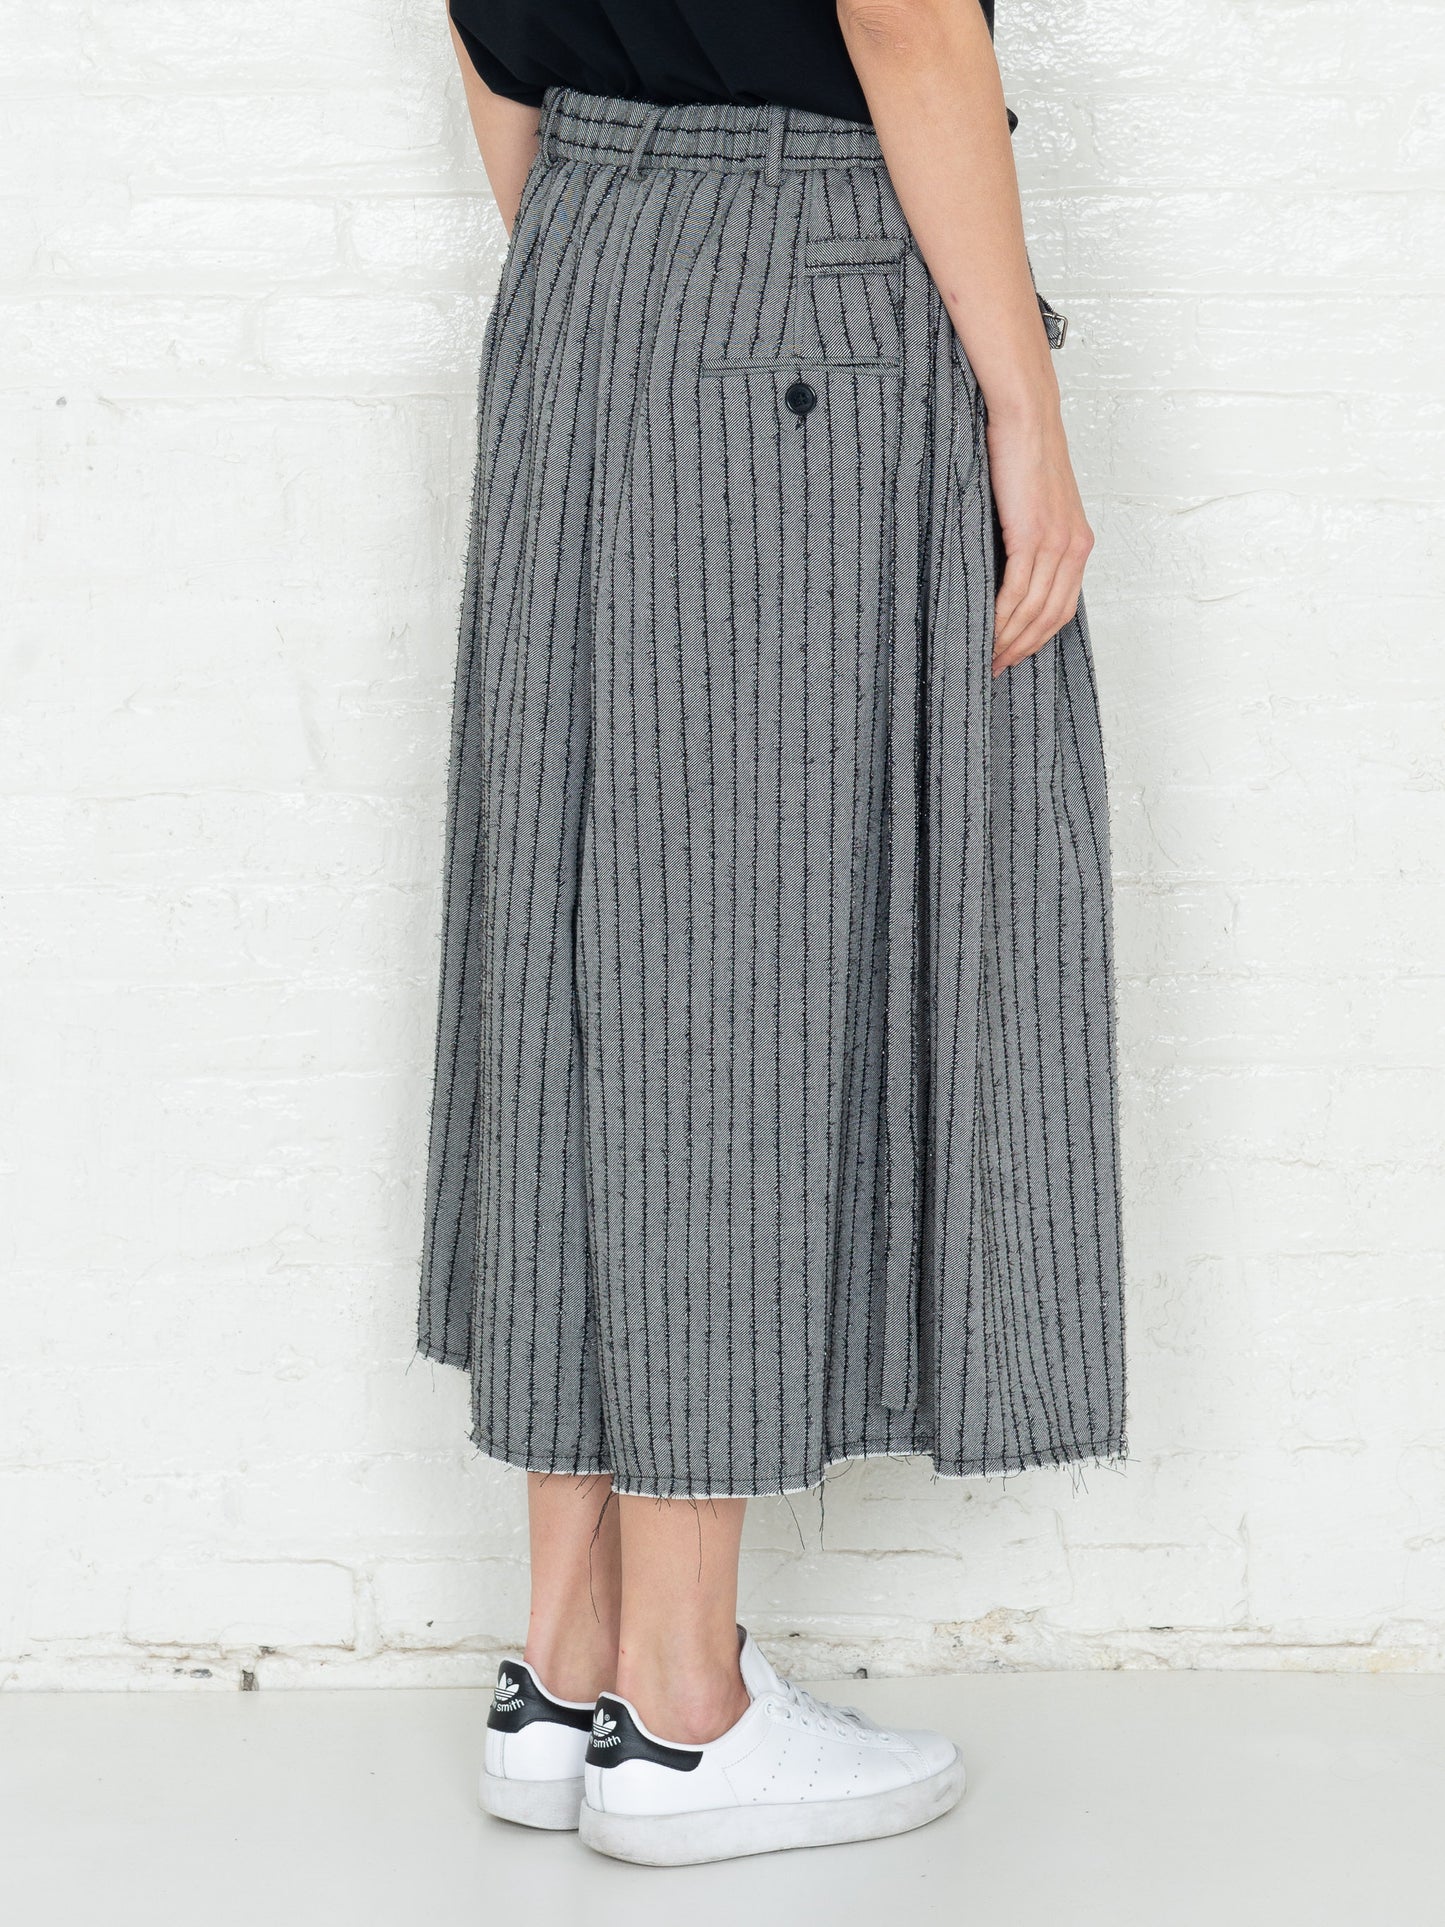 "The Skirt Pant" in Grey & Black Stripes